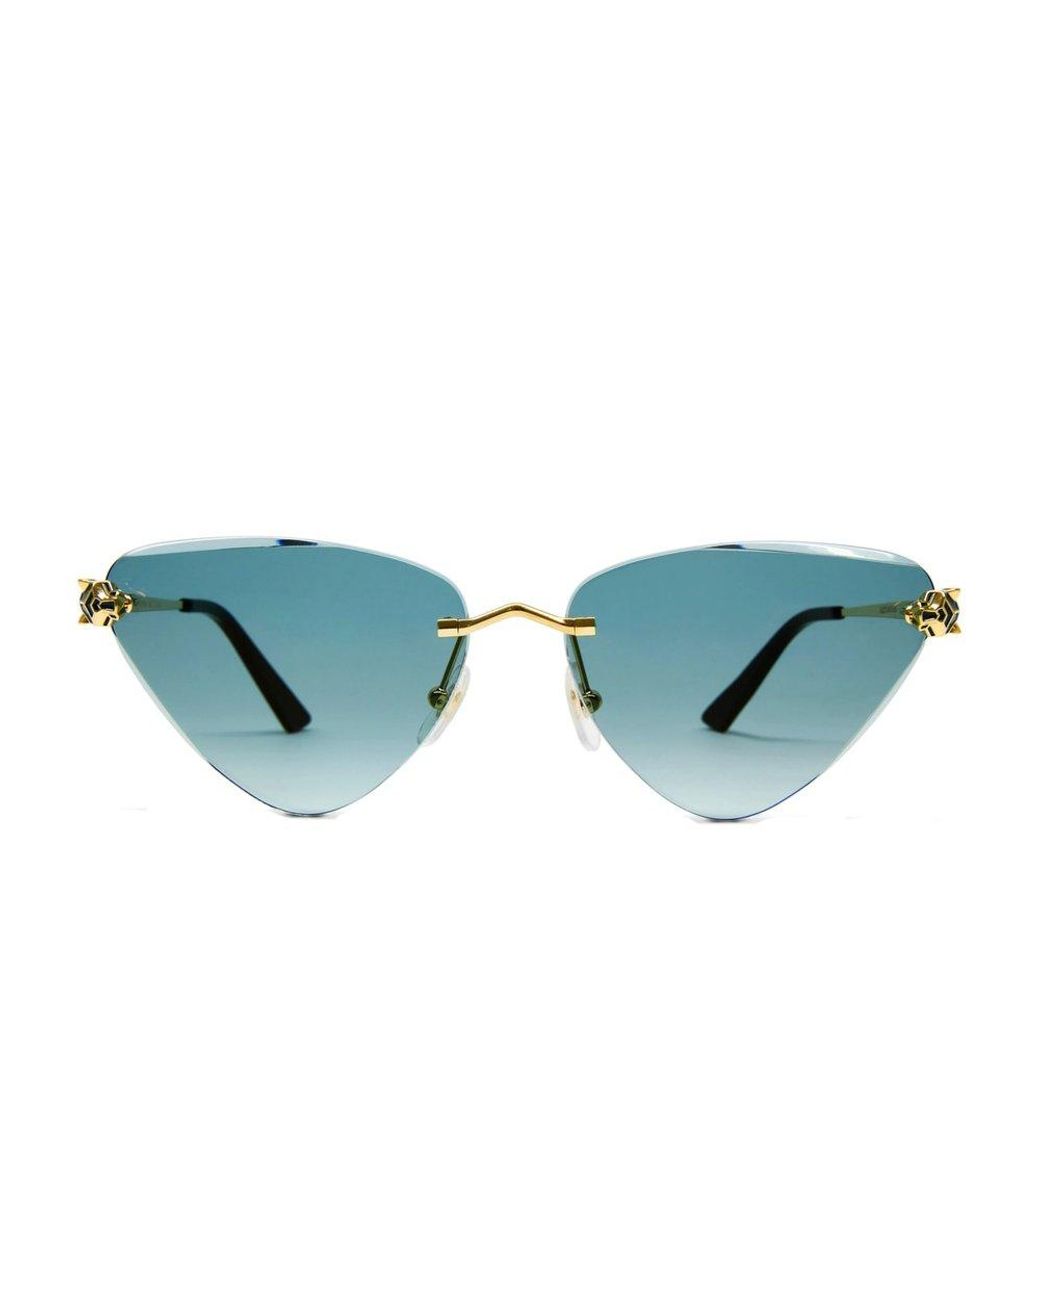 Cartier Triangle Frameless Sunglasses in Blue